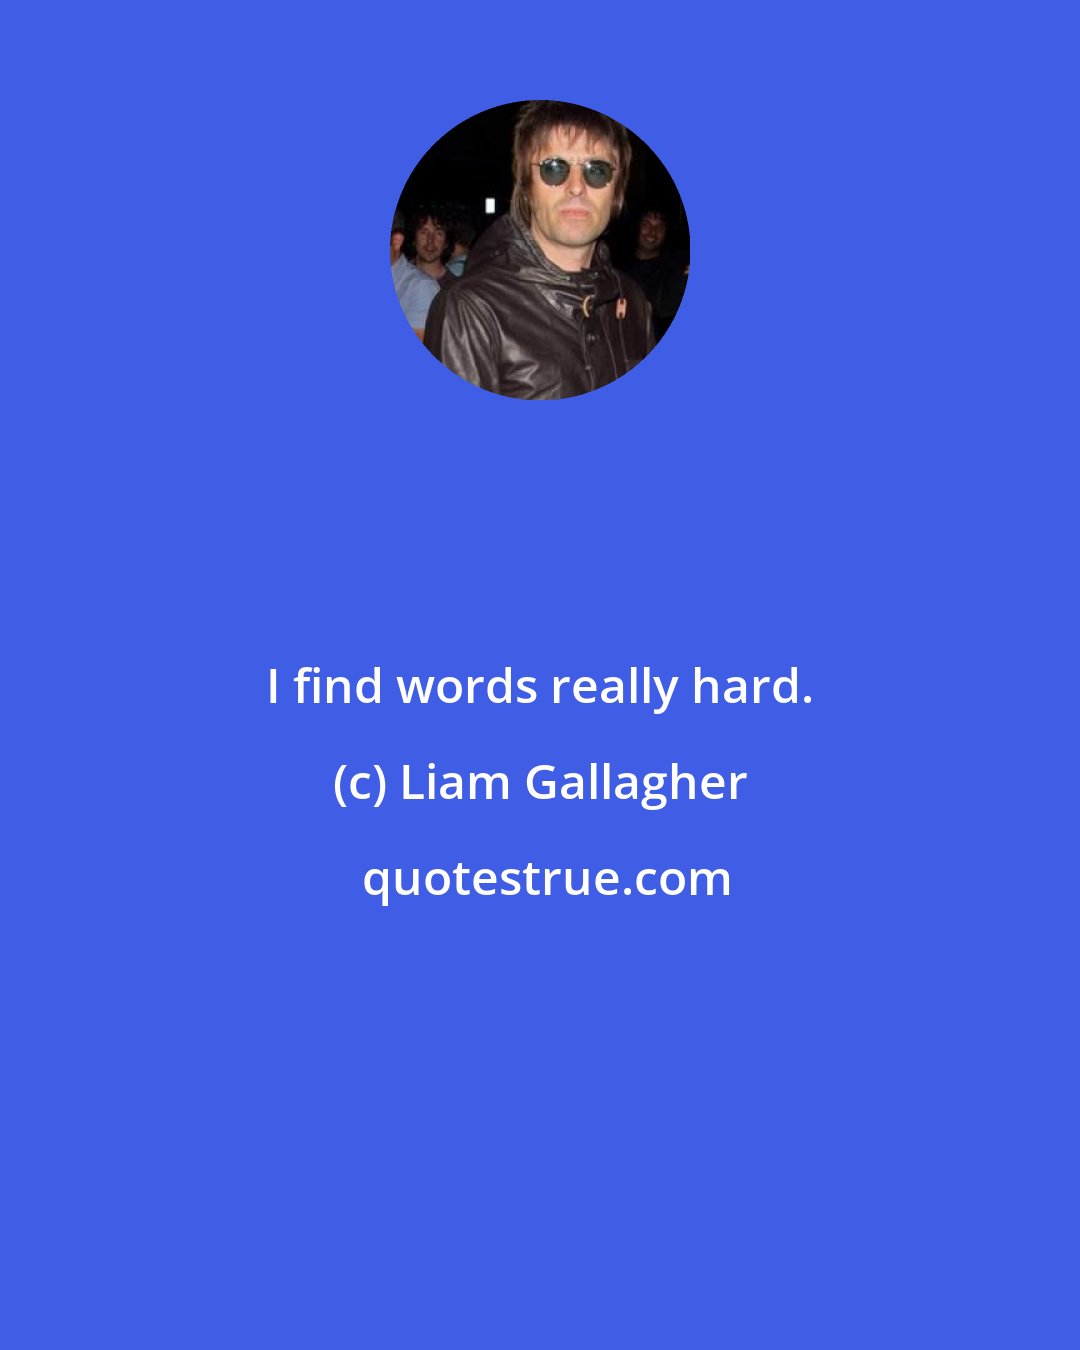 Liam Gallagher: I find words really hard.